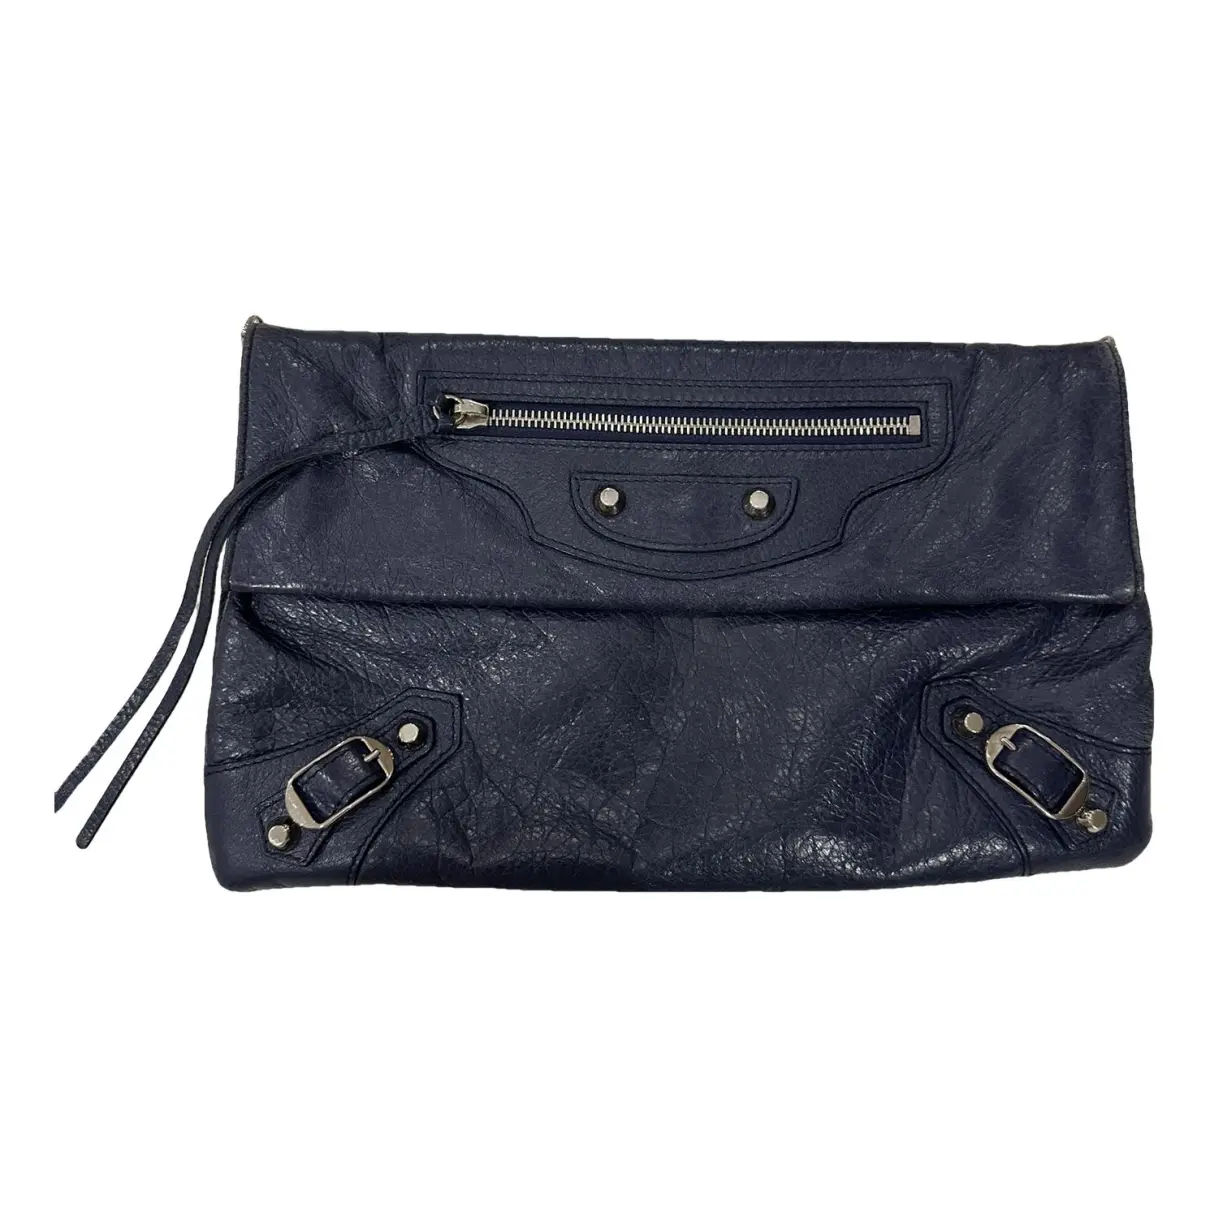 Envelop leather clutch bag